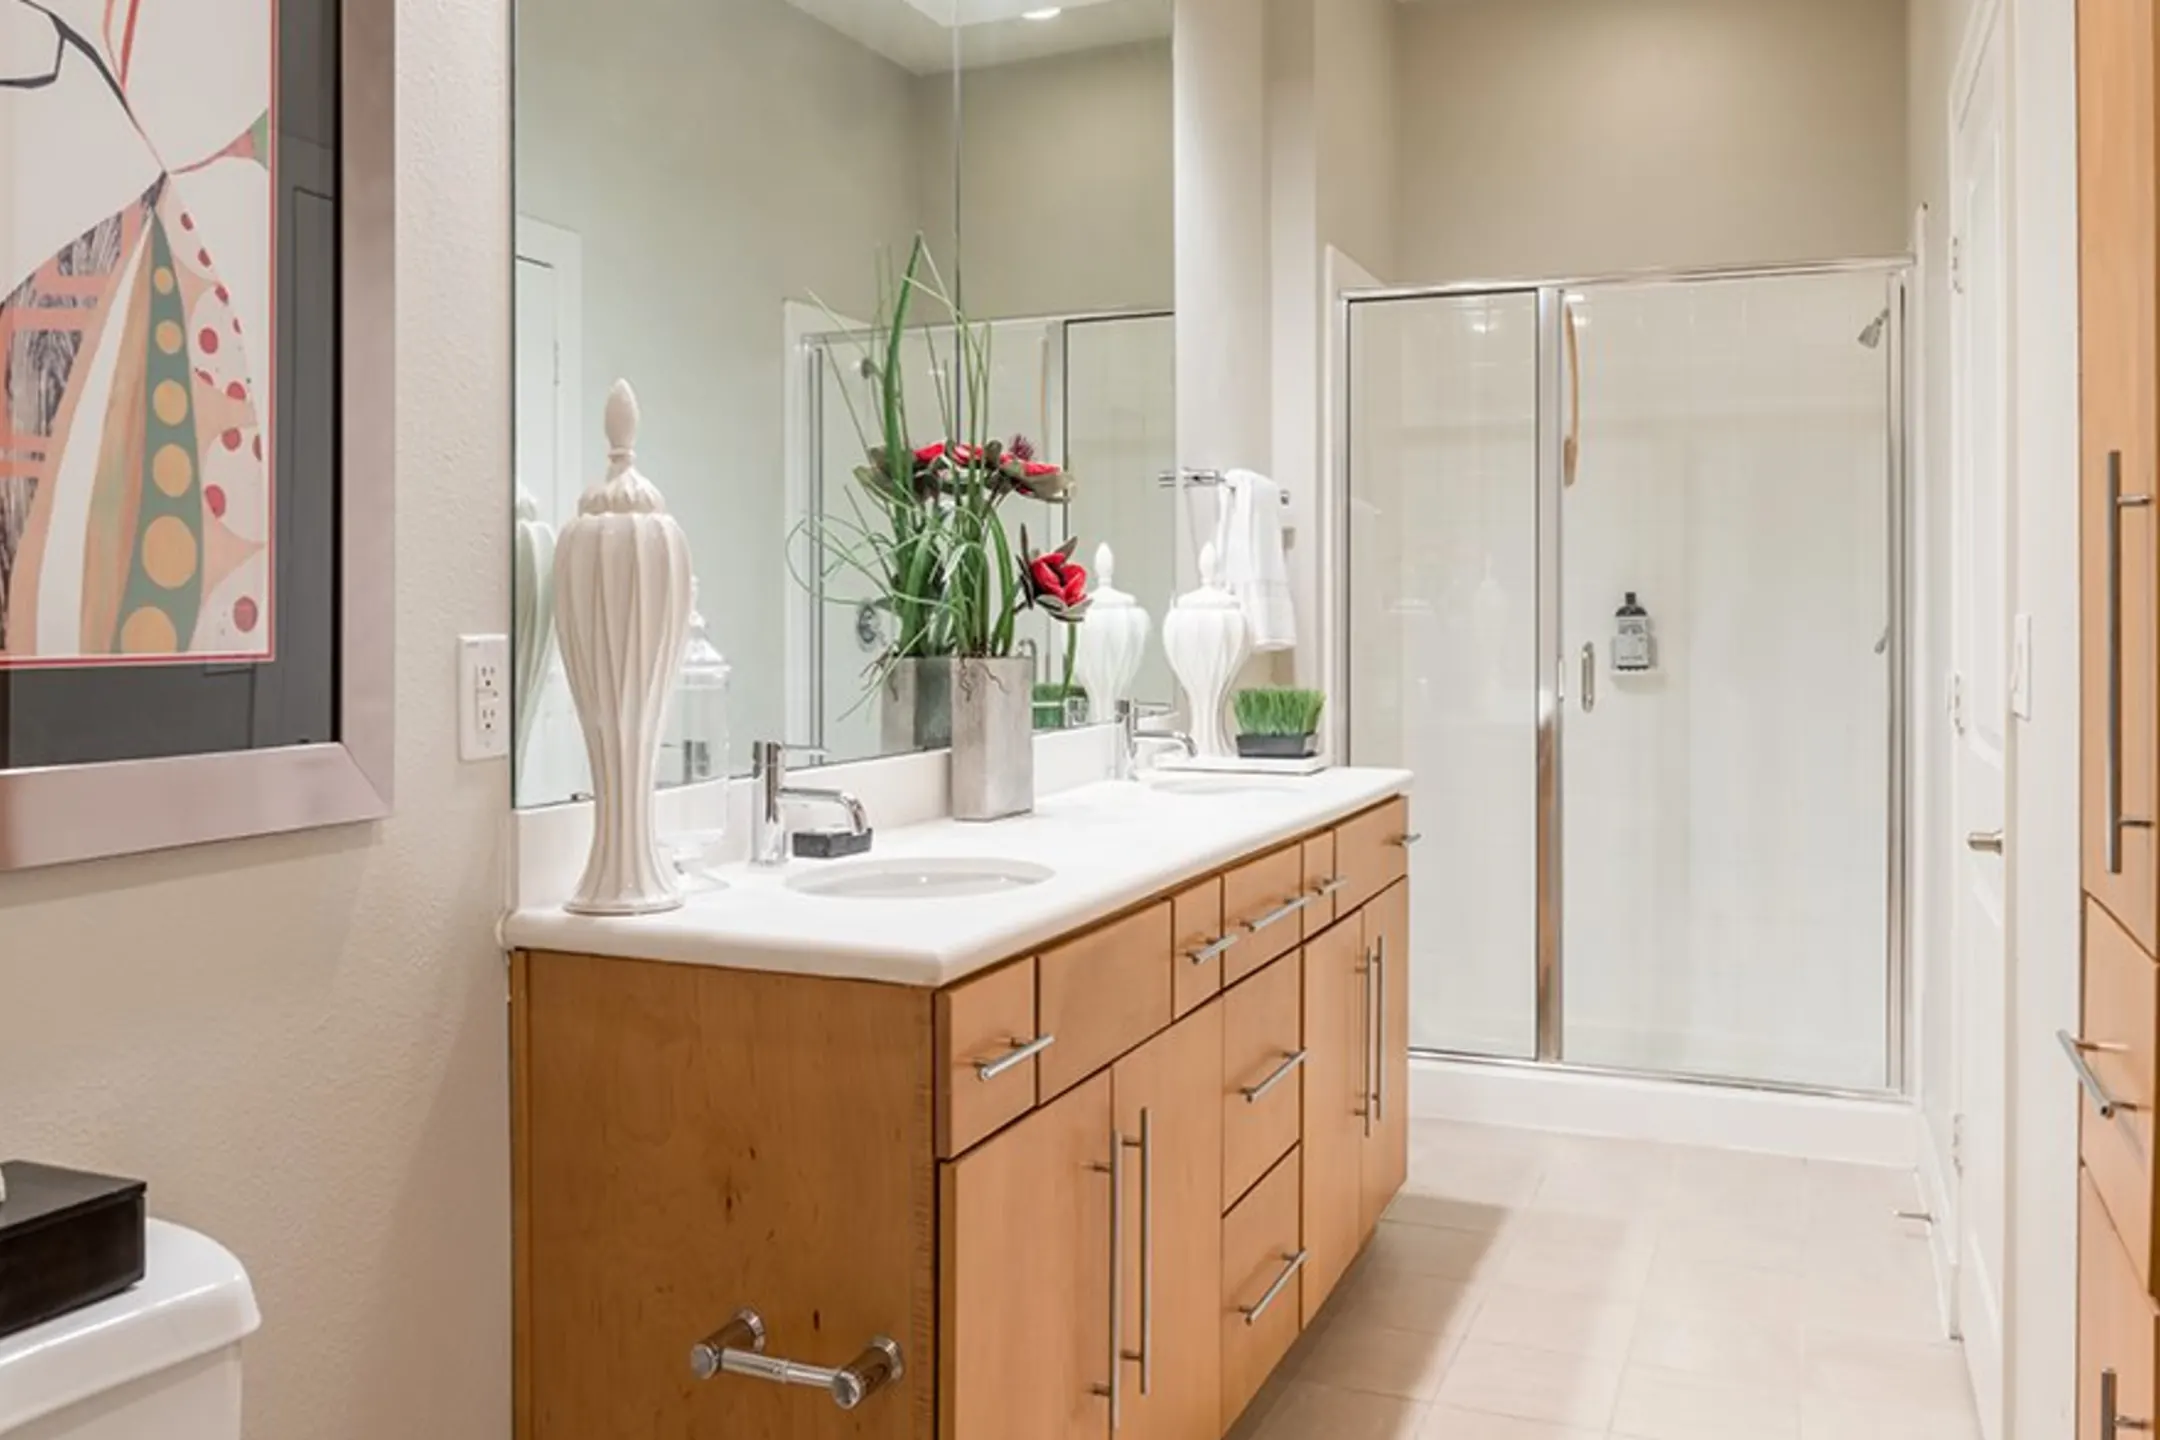 Bathroom - 77054 Luxury Properties - Houston, TX